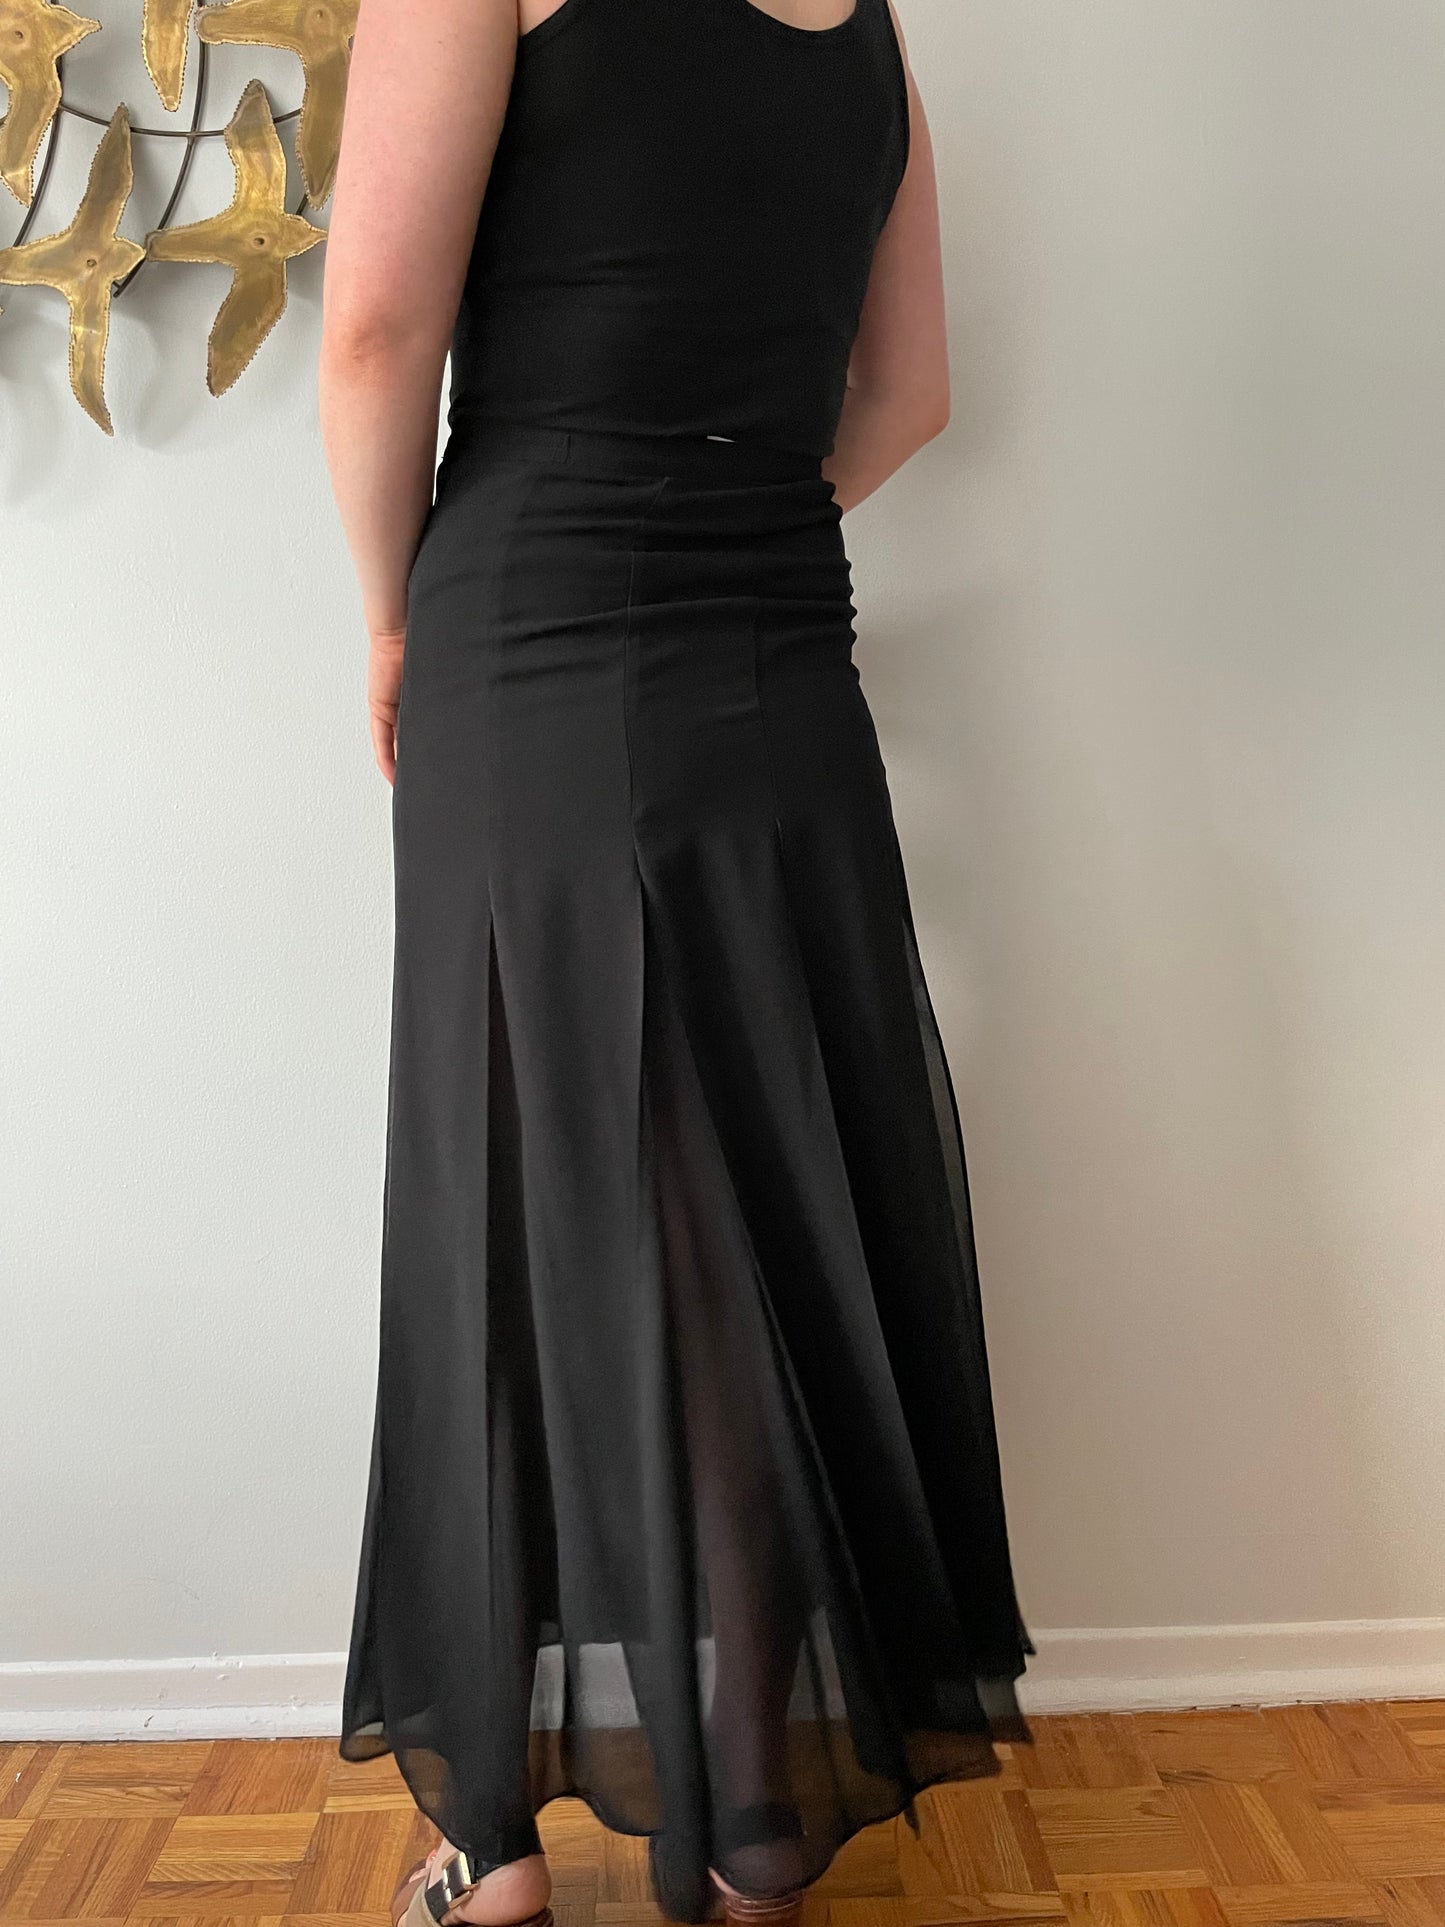 Cartise International Black Maxi Pleated Skirt - Size 4